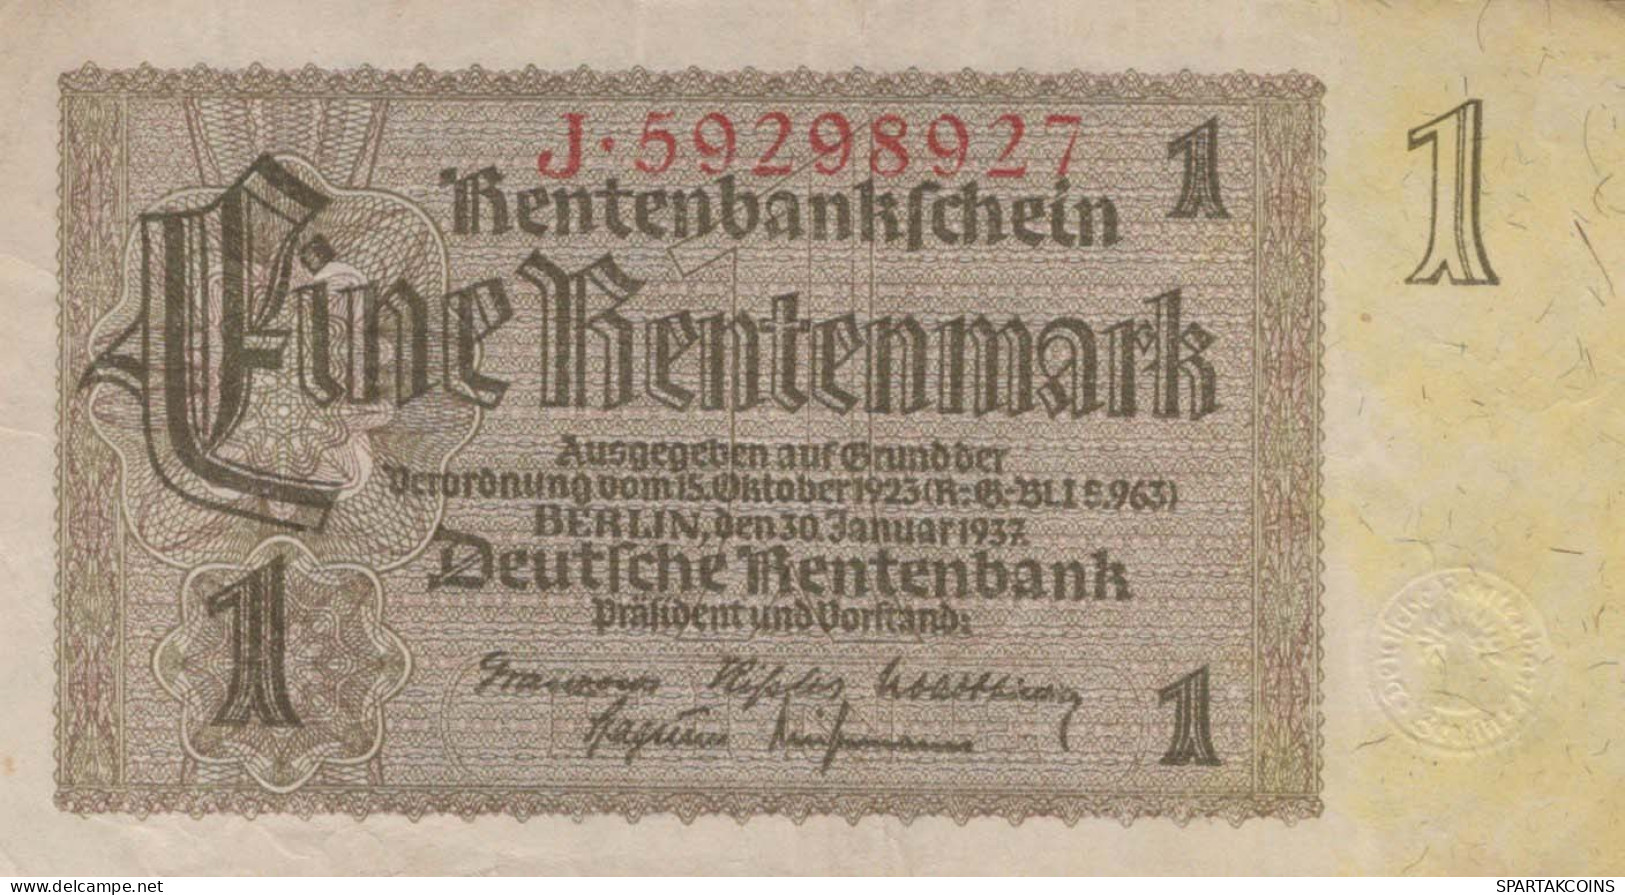 1 RENTENMARK 1923 Stadt BERLIN DEUTSCHLAND Papiergeld Banknote #PL195 - [11] Local Banknote Issues